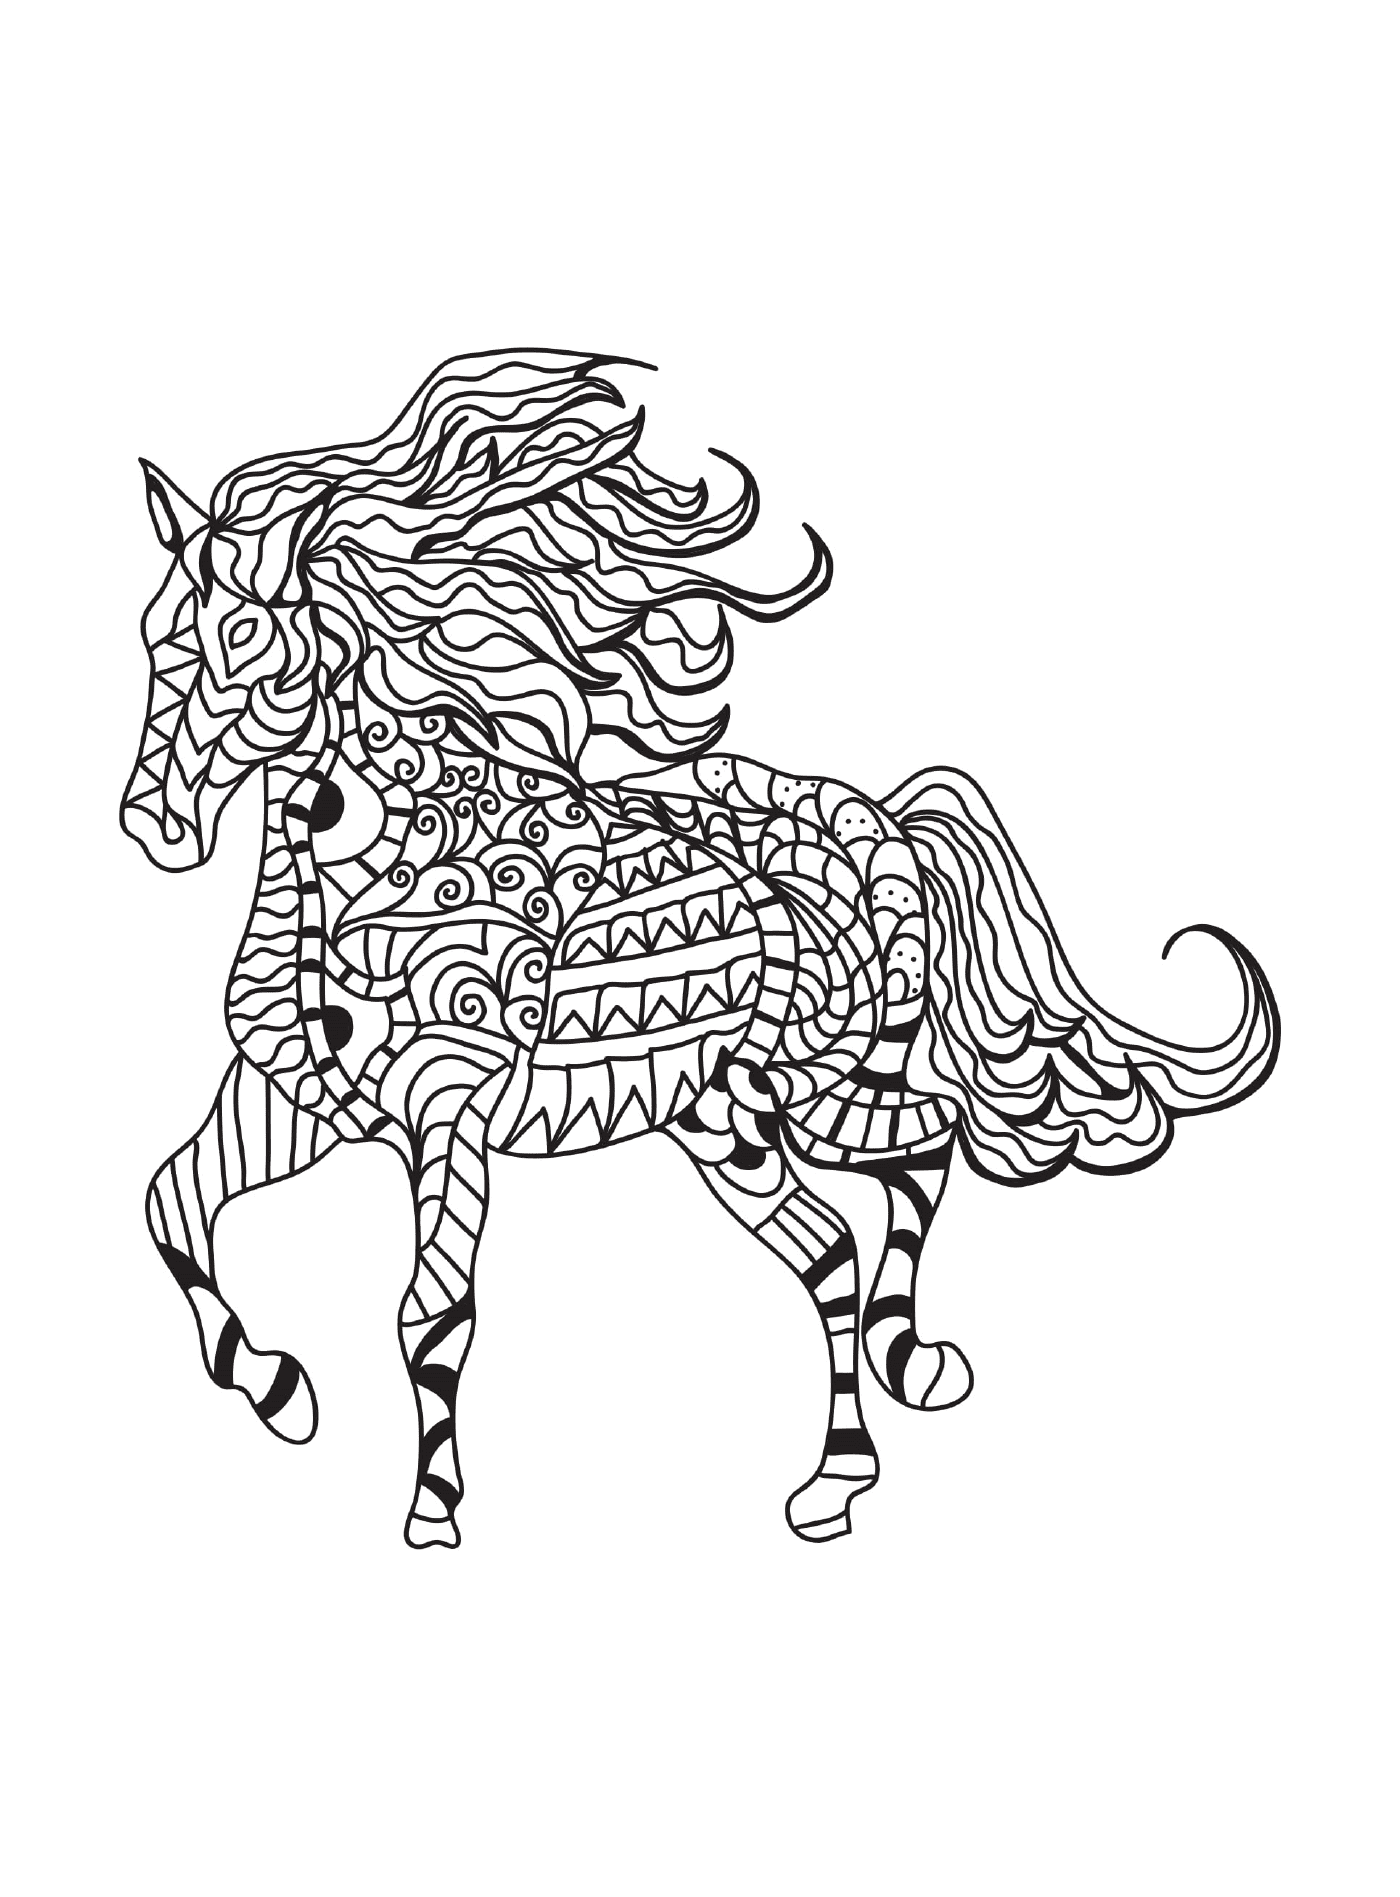  A horse 